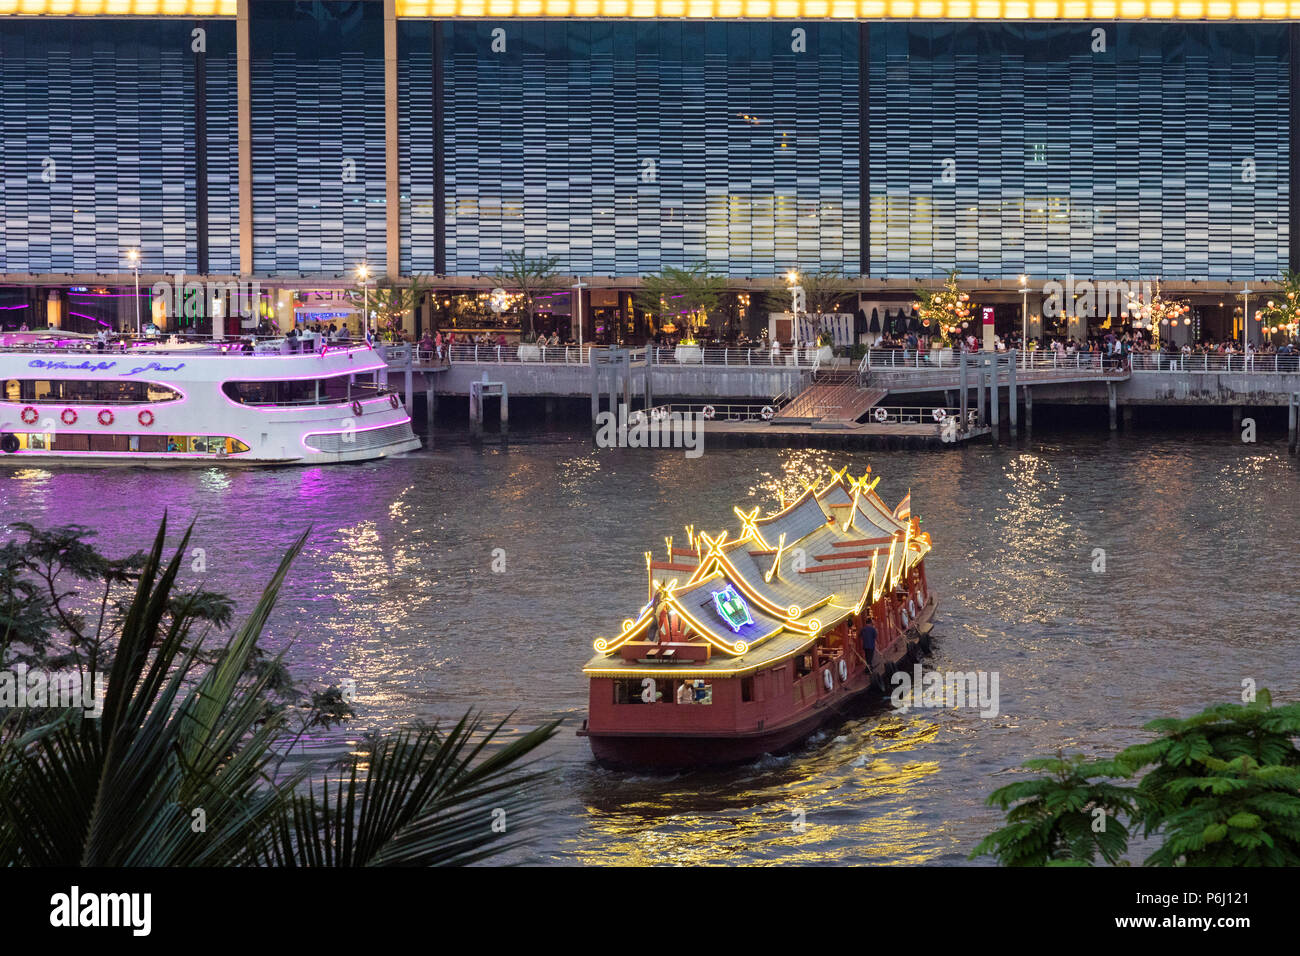 River City Shopping Mall sur la rivière Chao Phraya, Bangkok, Thaïlande Banque D'Images